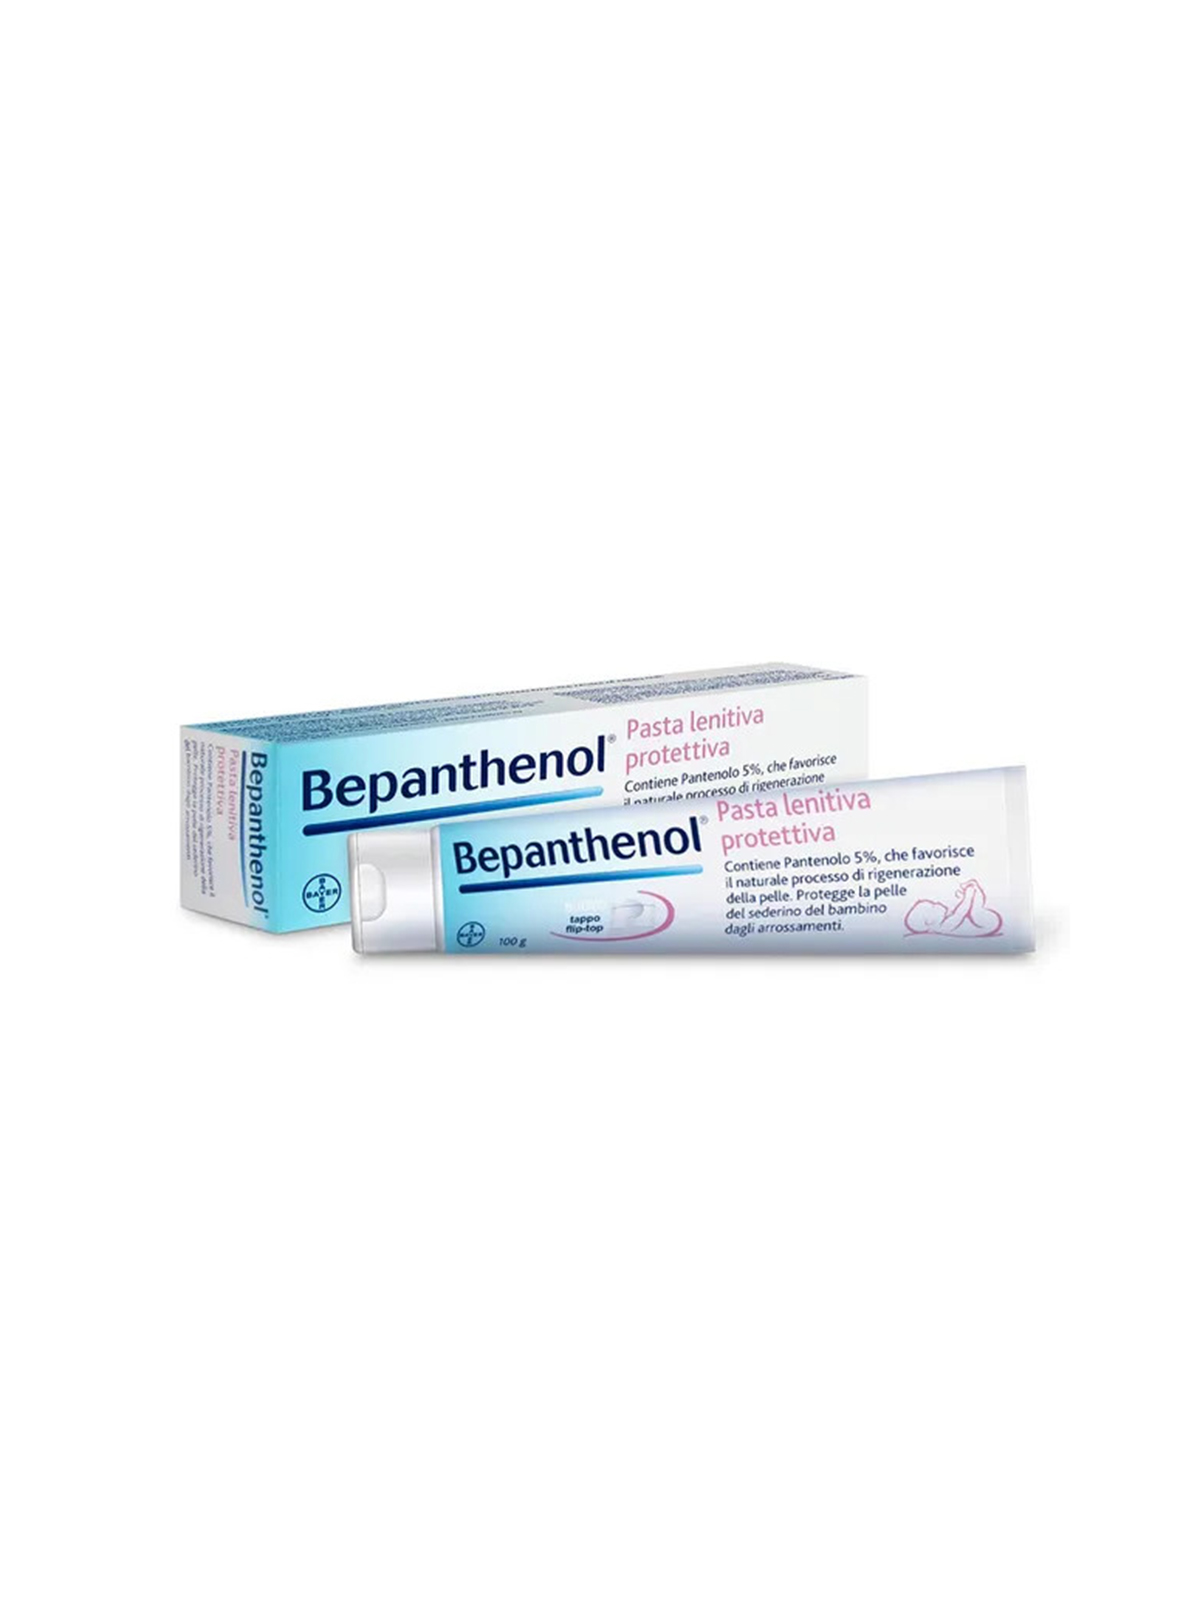 Bepanthenol pasta lenitiva protettiva - crema cambio pannolino anti arrossamento neonato - 100 g - Bepanthenol